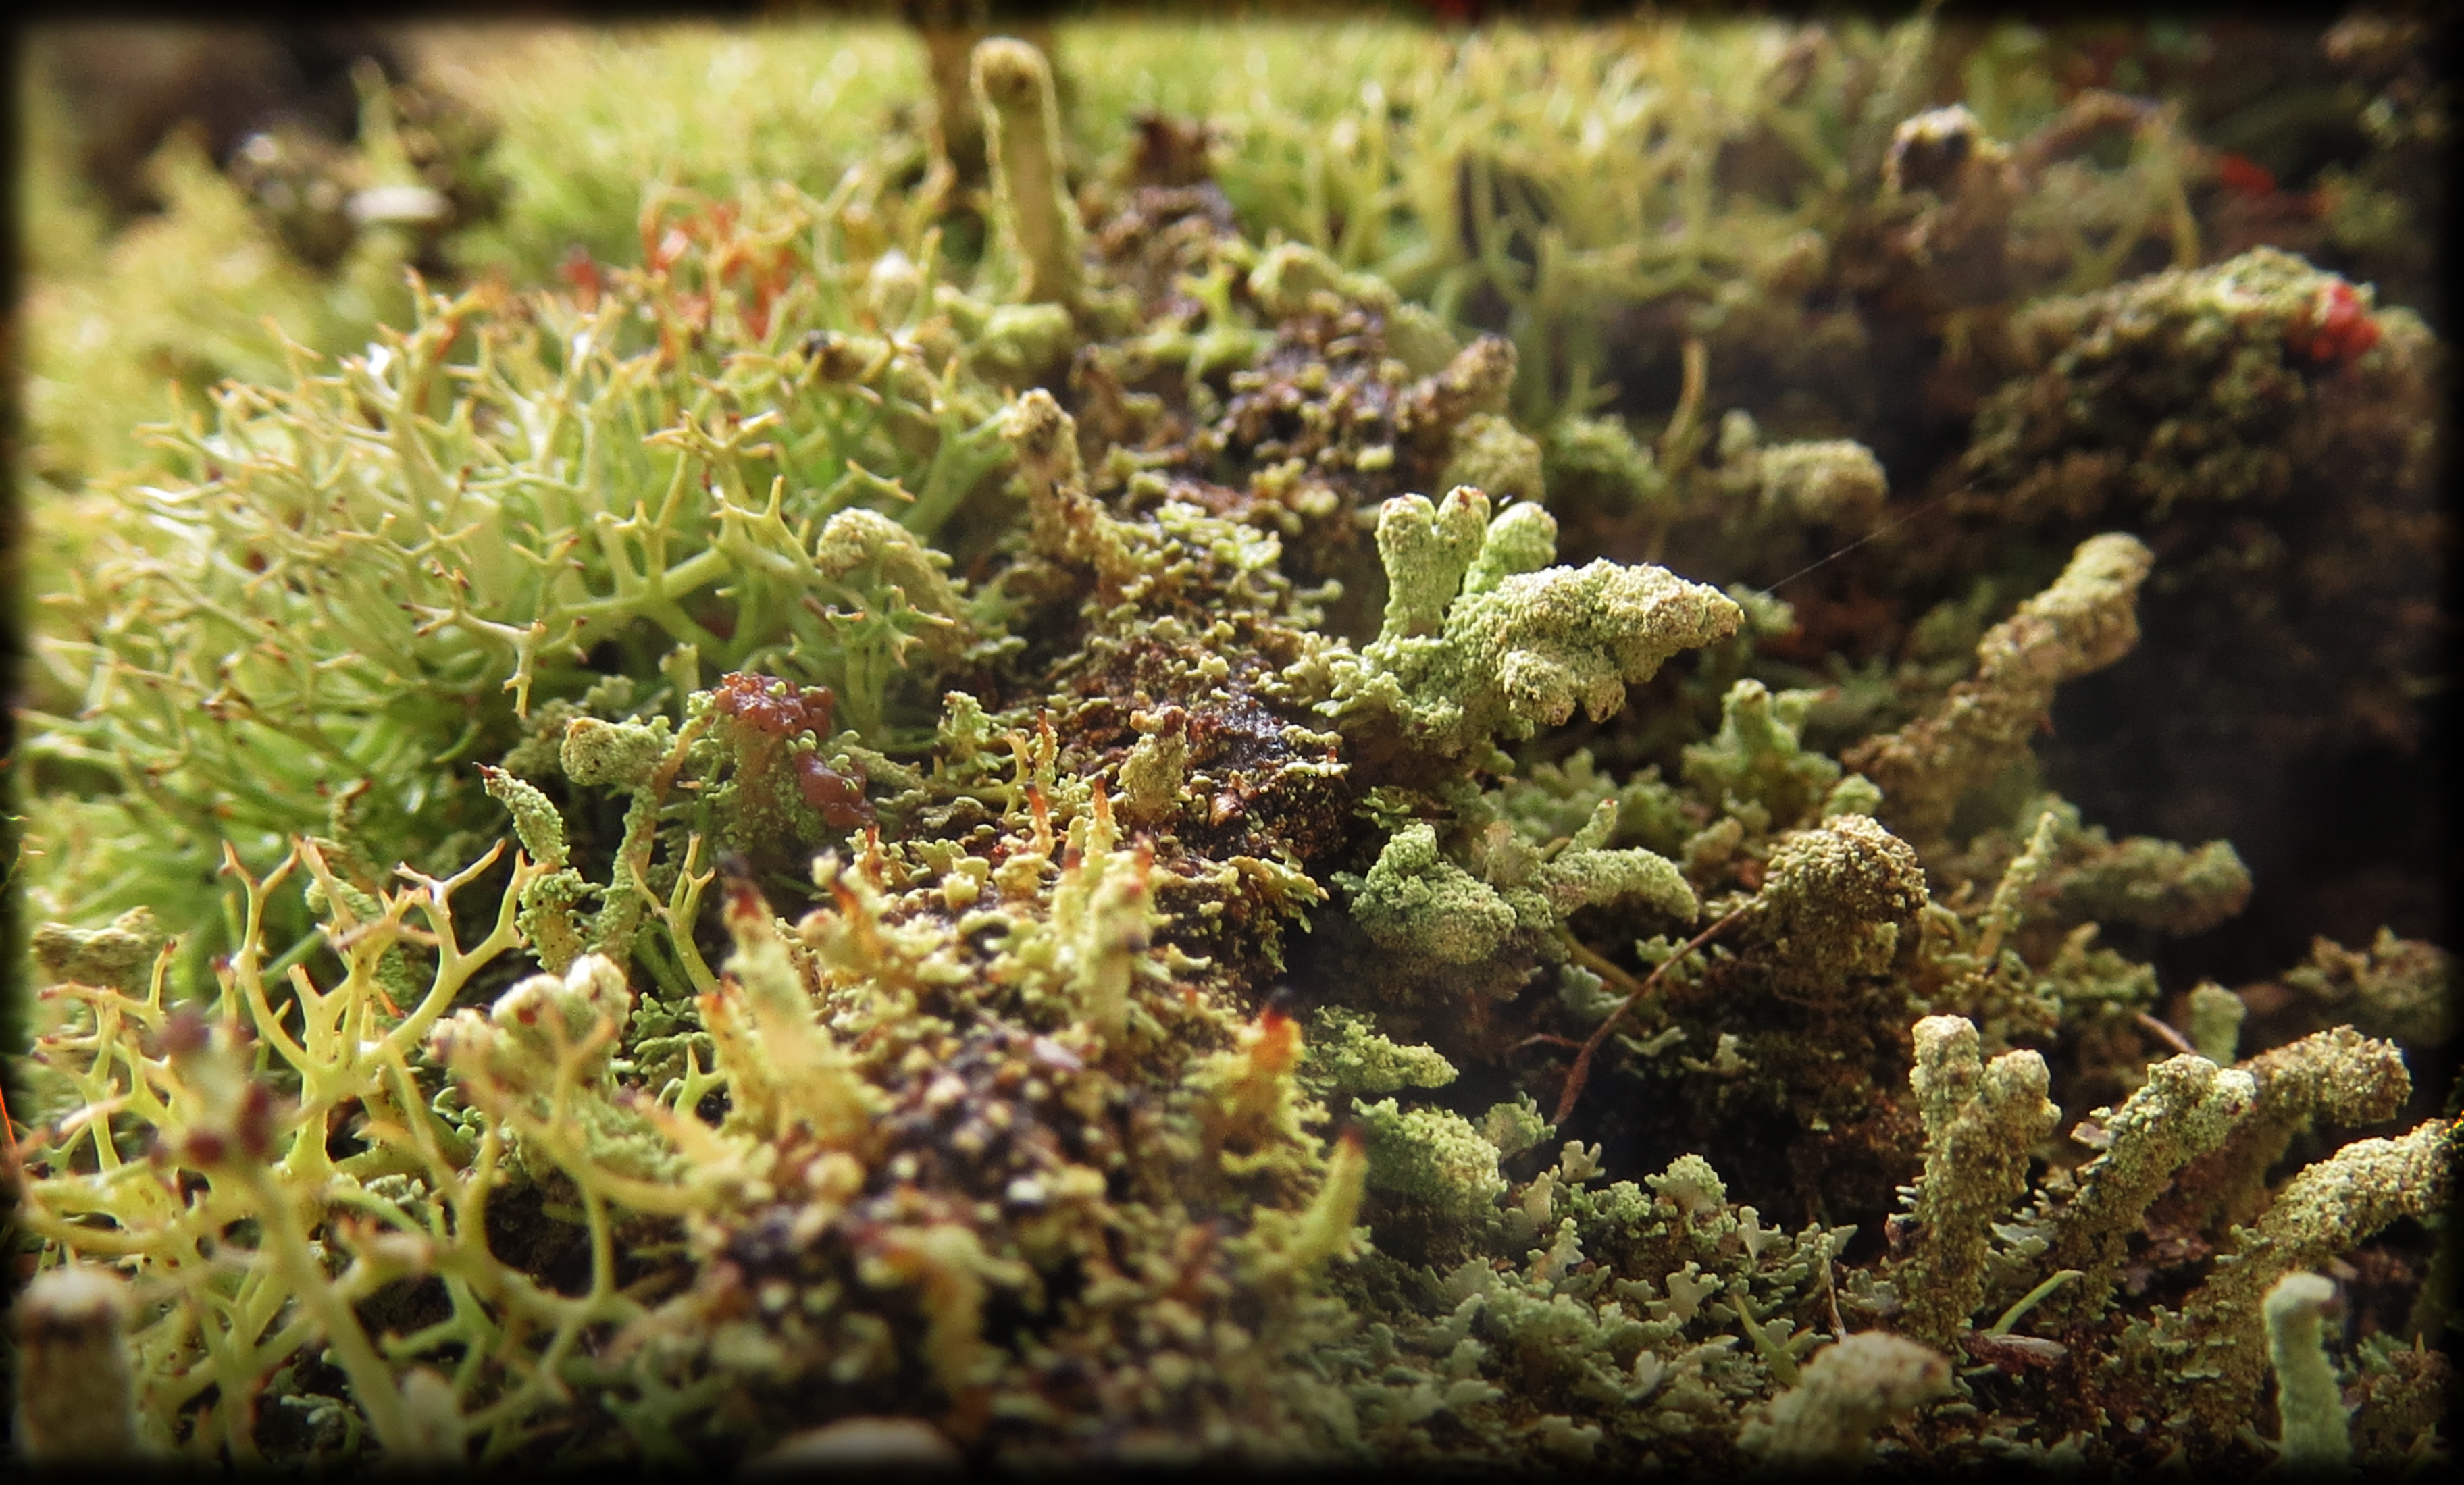 Likin' the lichen